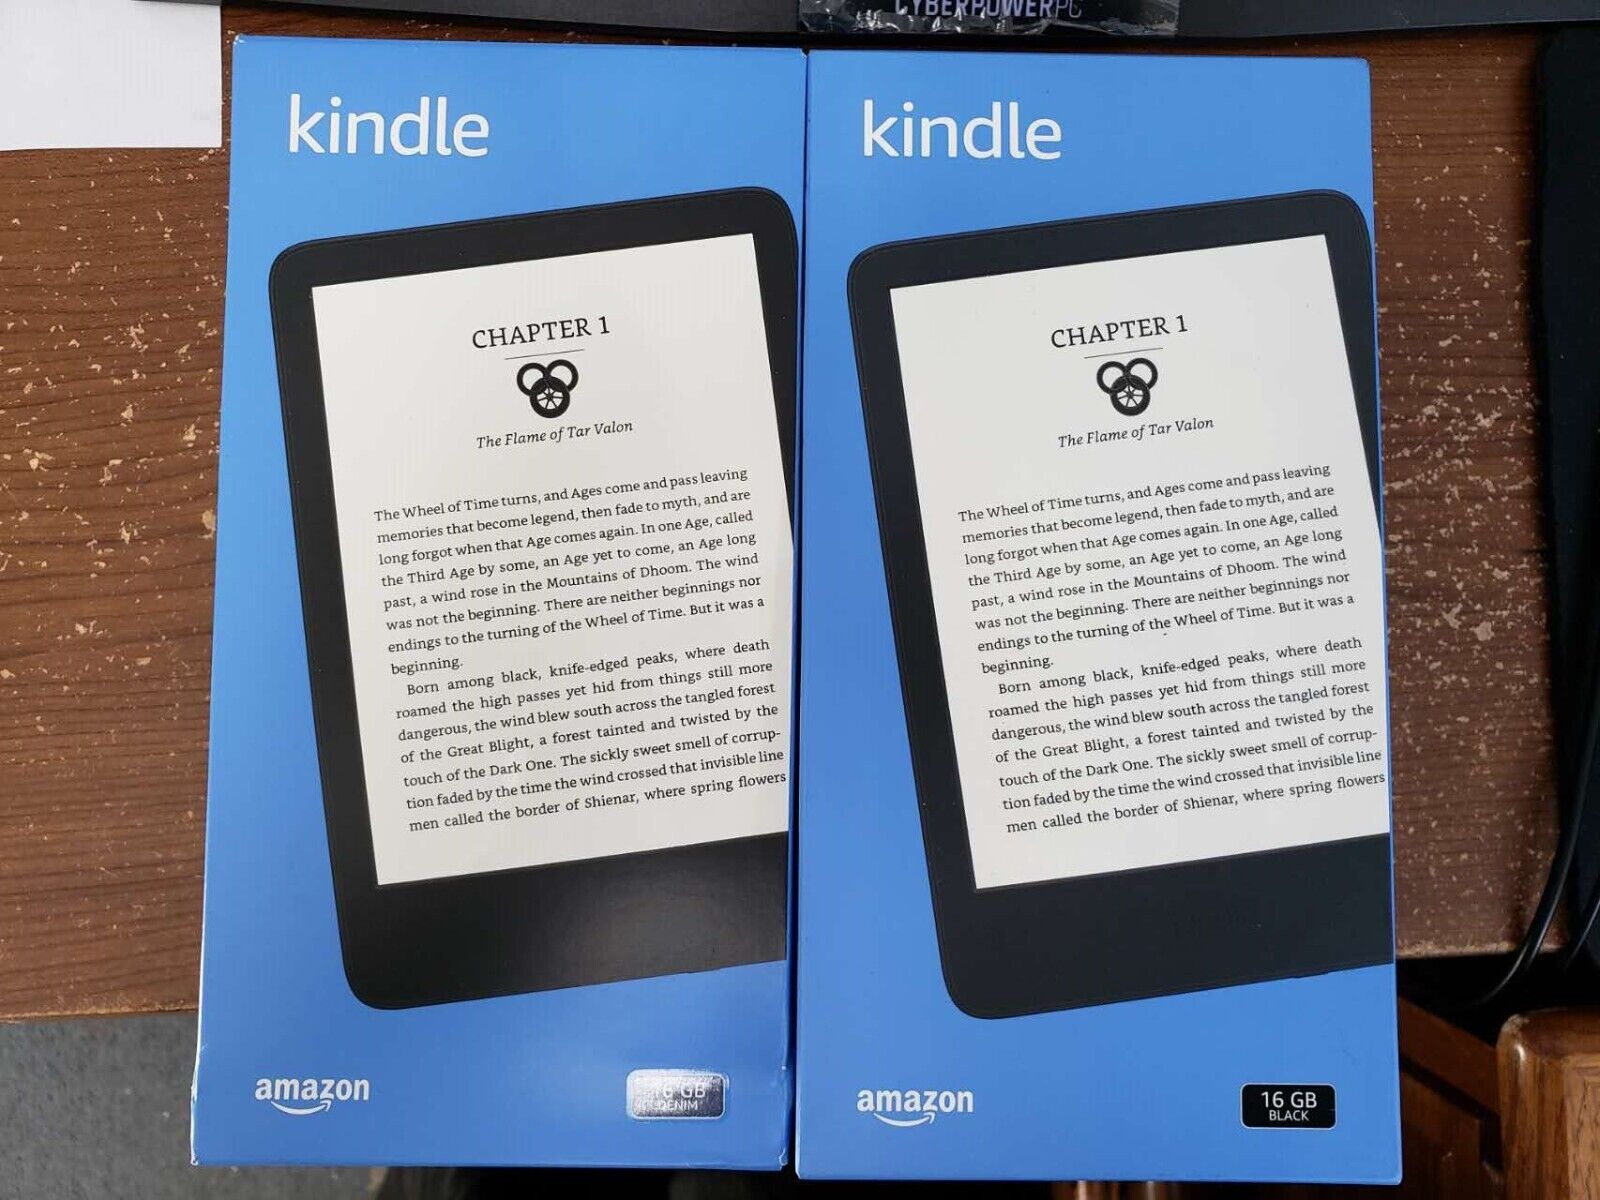 Amazon KindleThe lightest and most compact Kindle